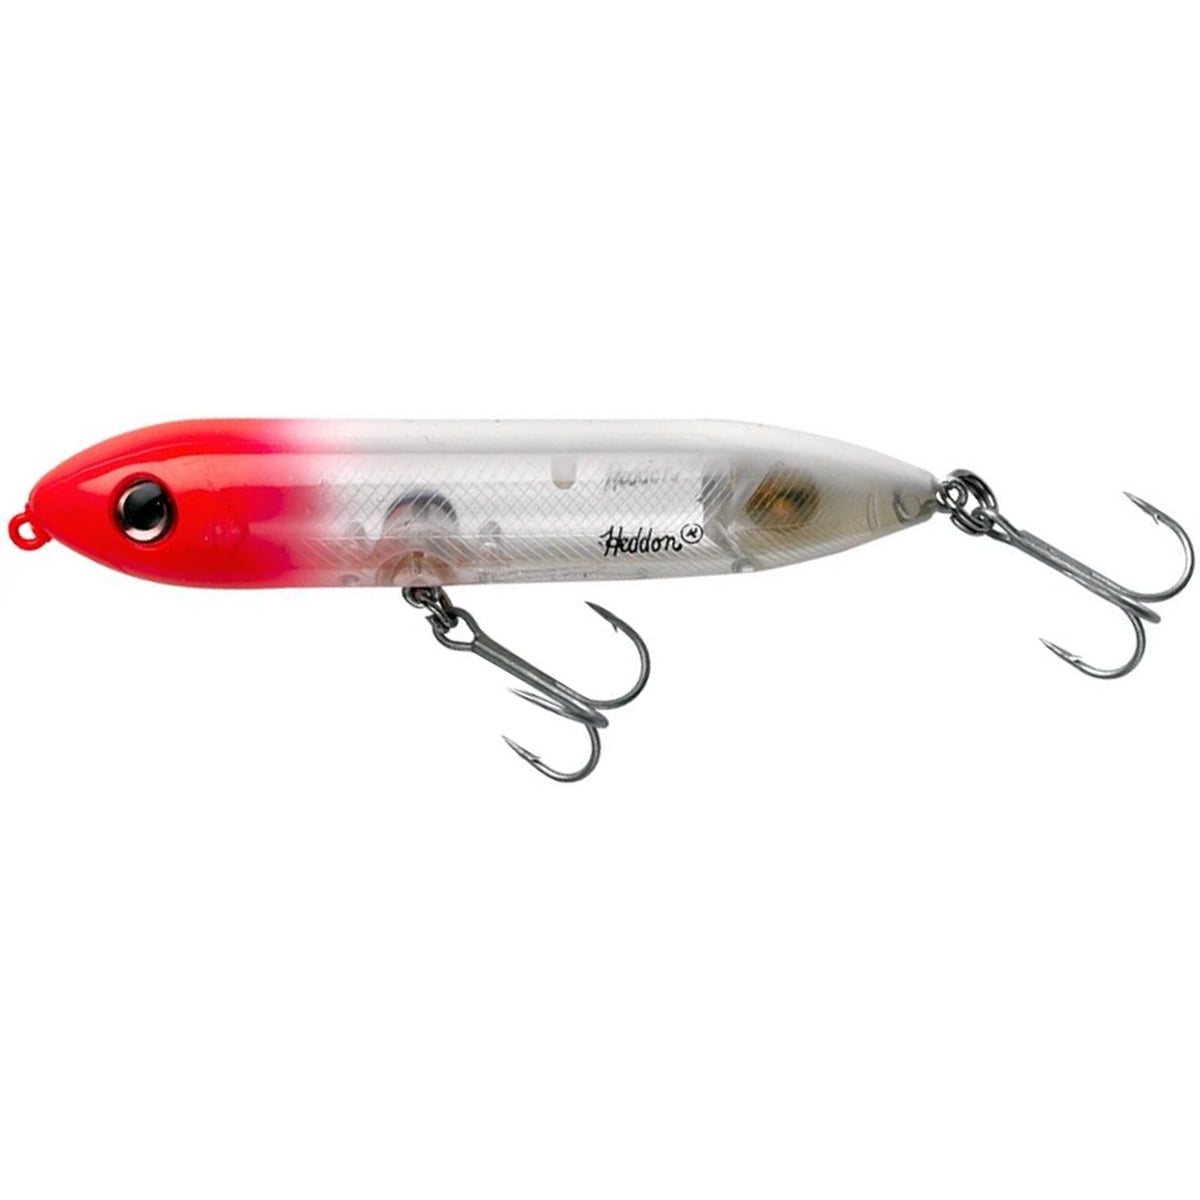 Heddon Zara Spook Fishing Lure Hard bait G Finish Red Head 4 1/2 in 3/4 oz